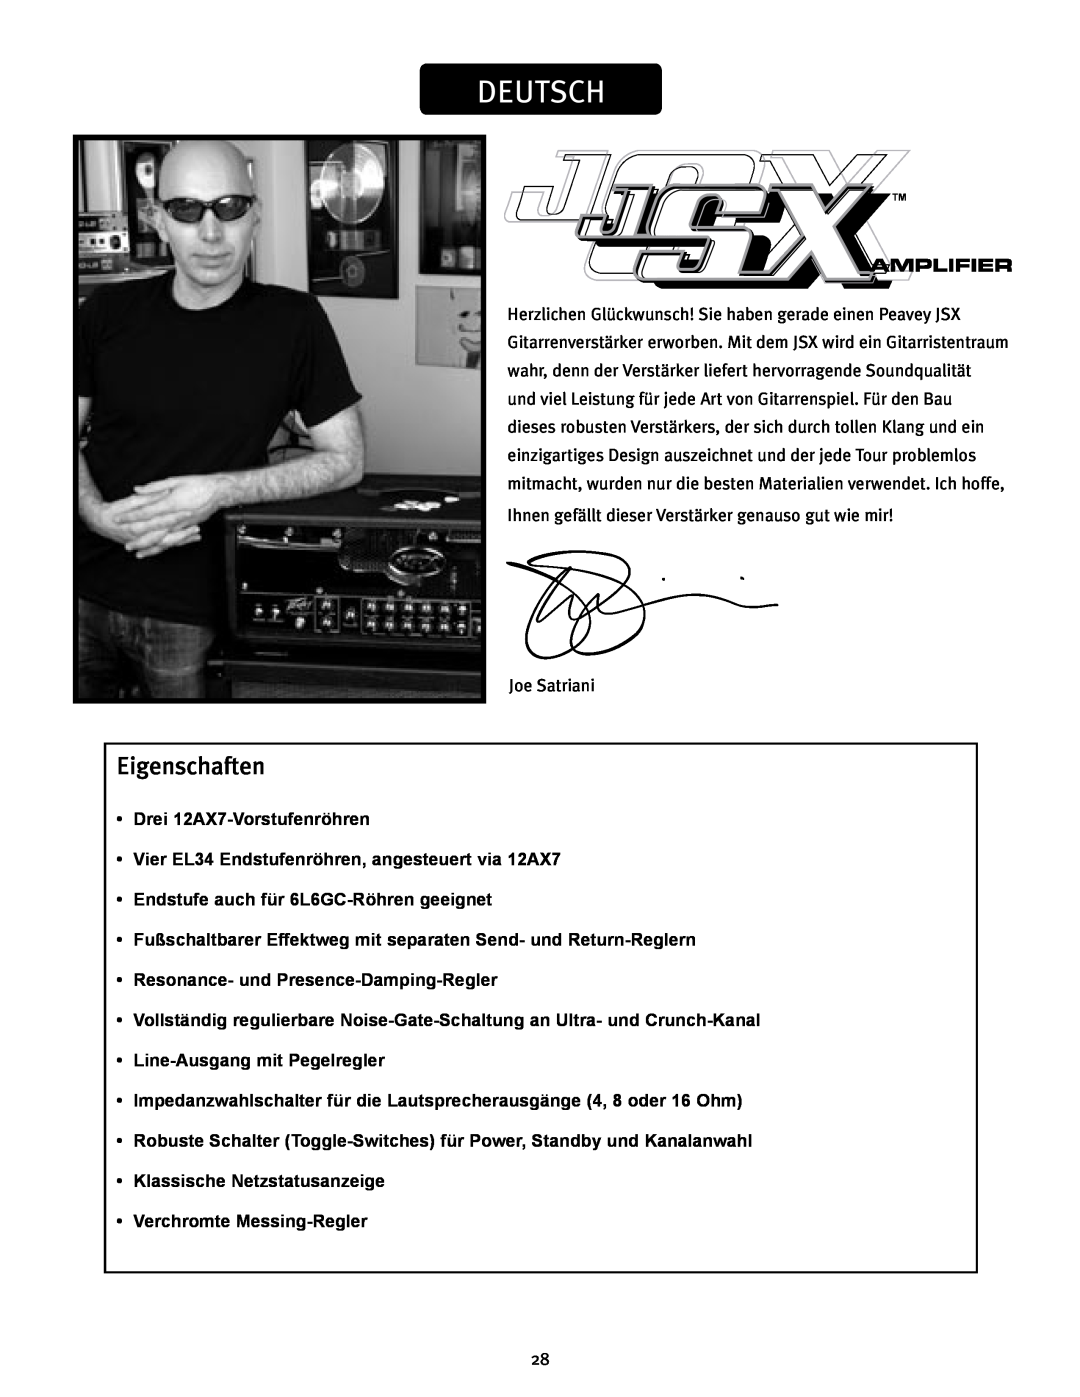 Peavey JSX Joe Satriani Signature All-Tube Amplifier manual Deutsch, Eigenschaften 